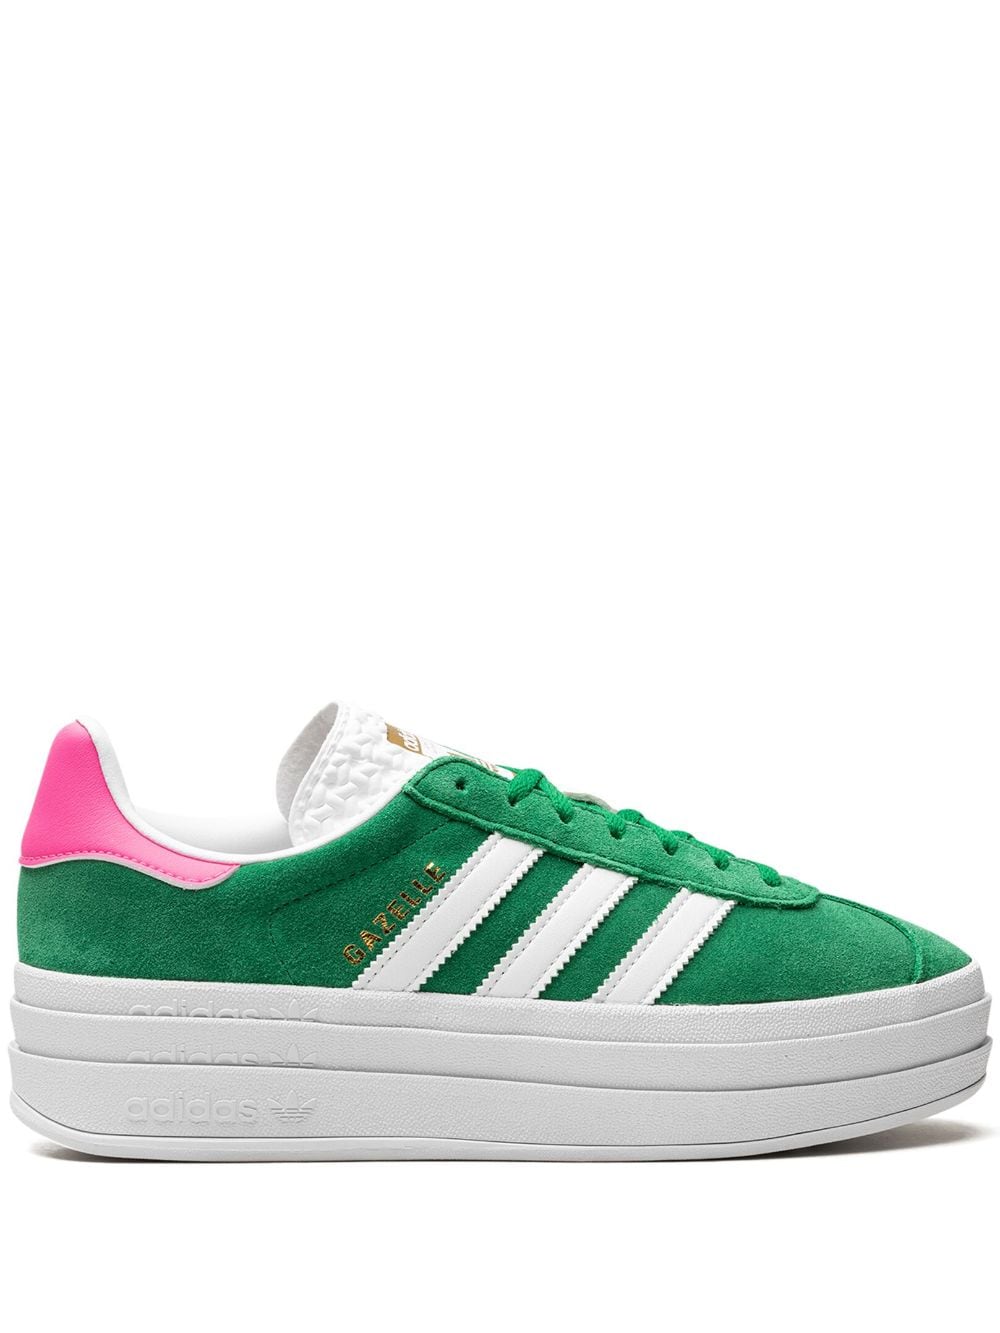 adidas Gazelle Bold "Green/Lucid Pink" sneakers von adidas